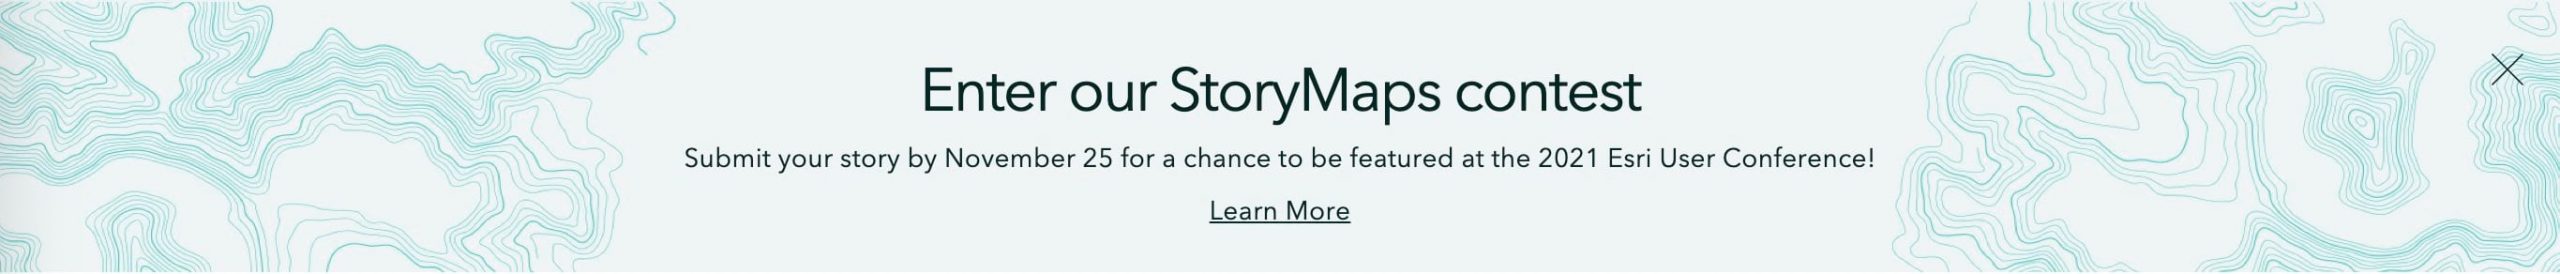 Storytelling contest banner